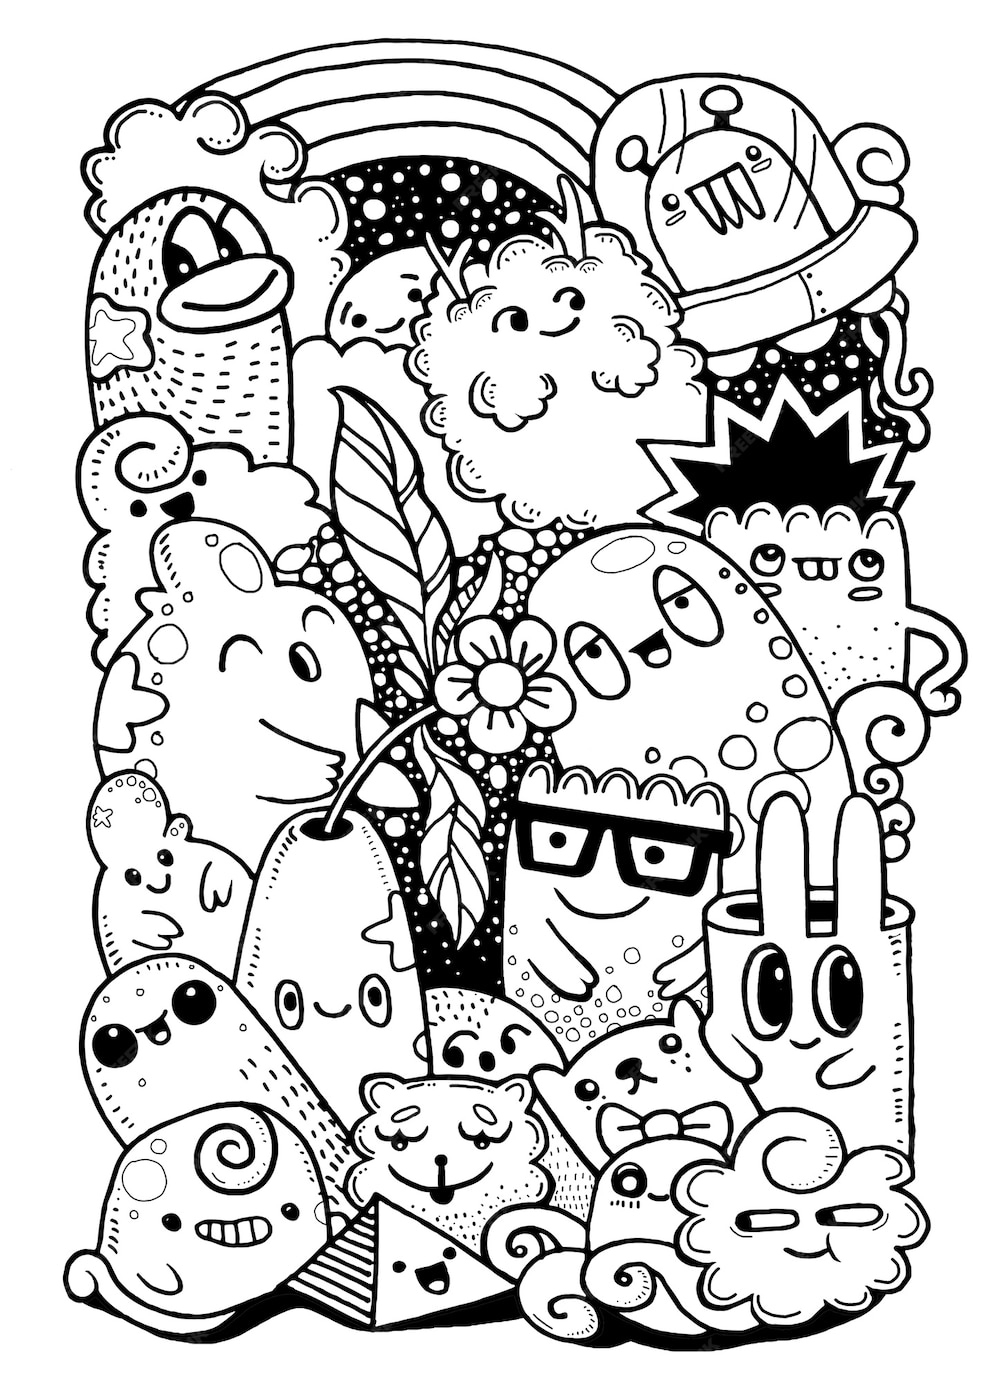 Premium Vector | Hipster hand drawn crazy doodle monster garden